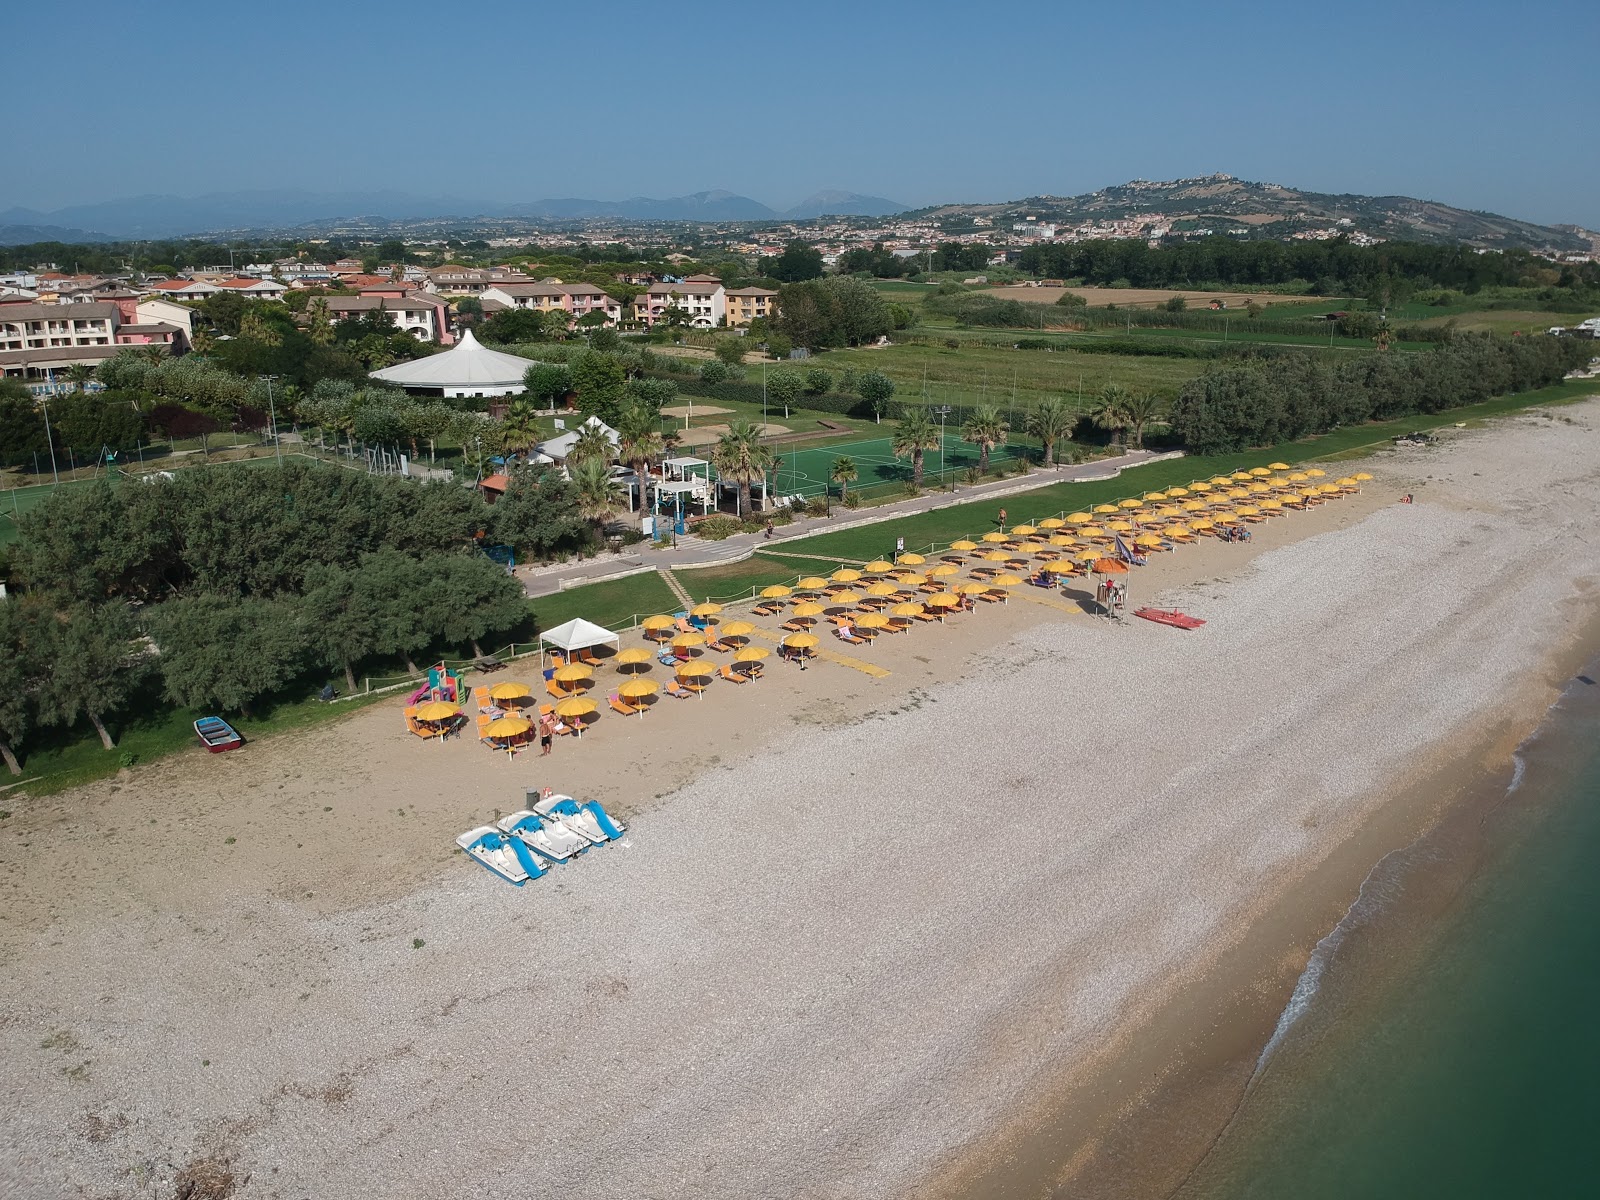 Photo of Spiaggia di Scerne amenities area